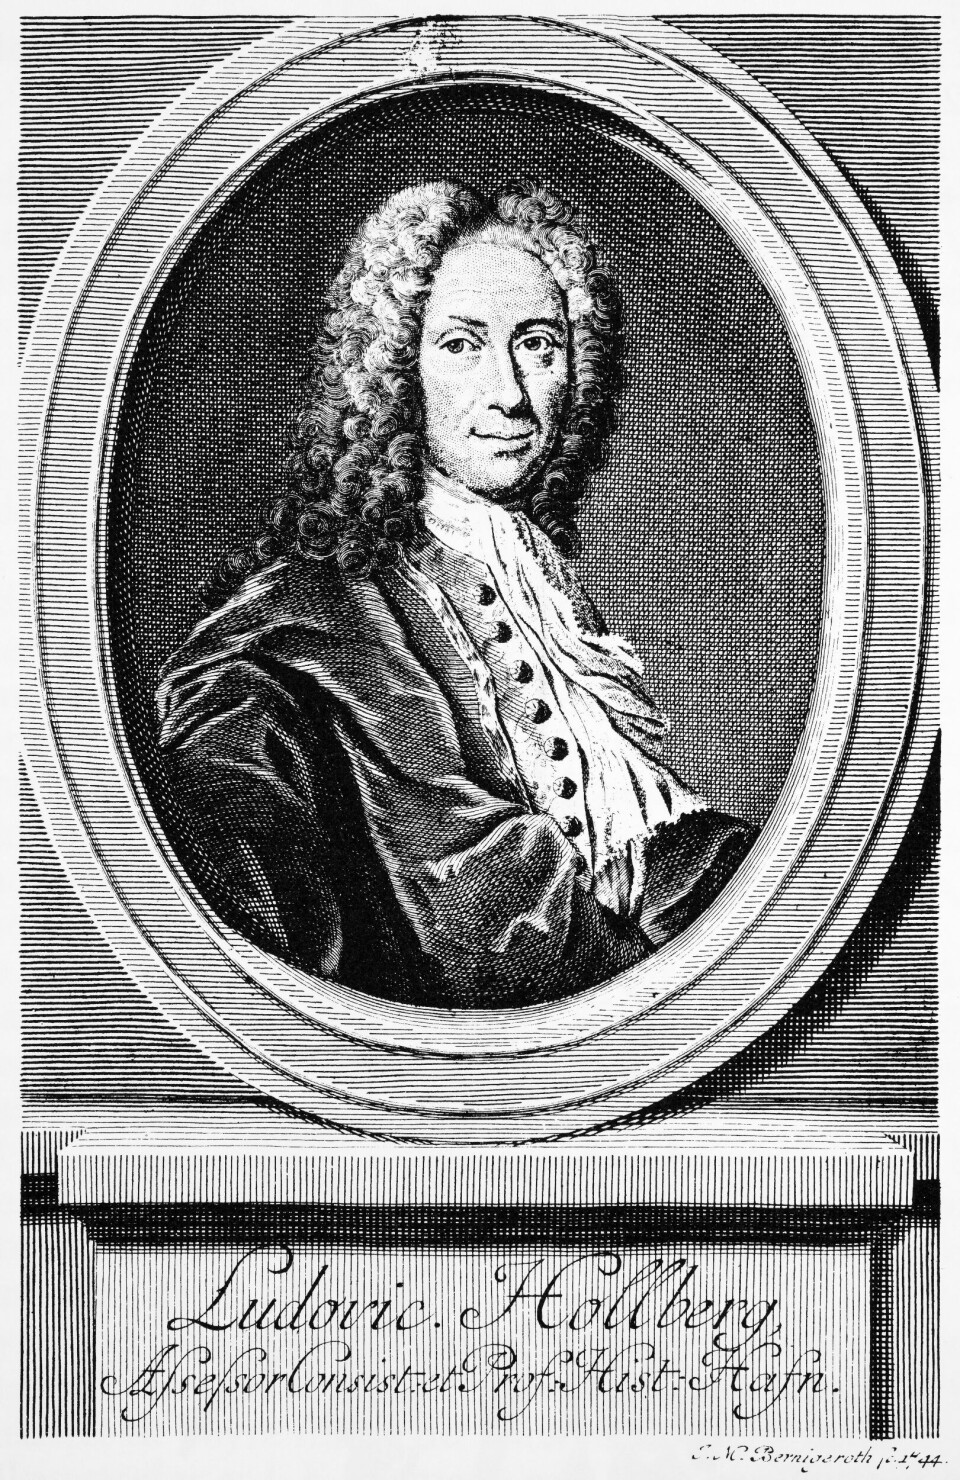 Holberg som fremstilt i Moralische Gedanken fra 1744. Dette skal etter sigende være det portrettet som ligner mest på forfatteren. Kilde: Universitetsbiblioteket i Bergen.